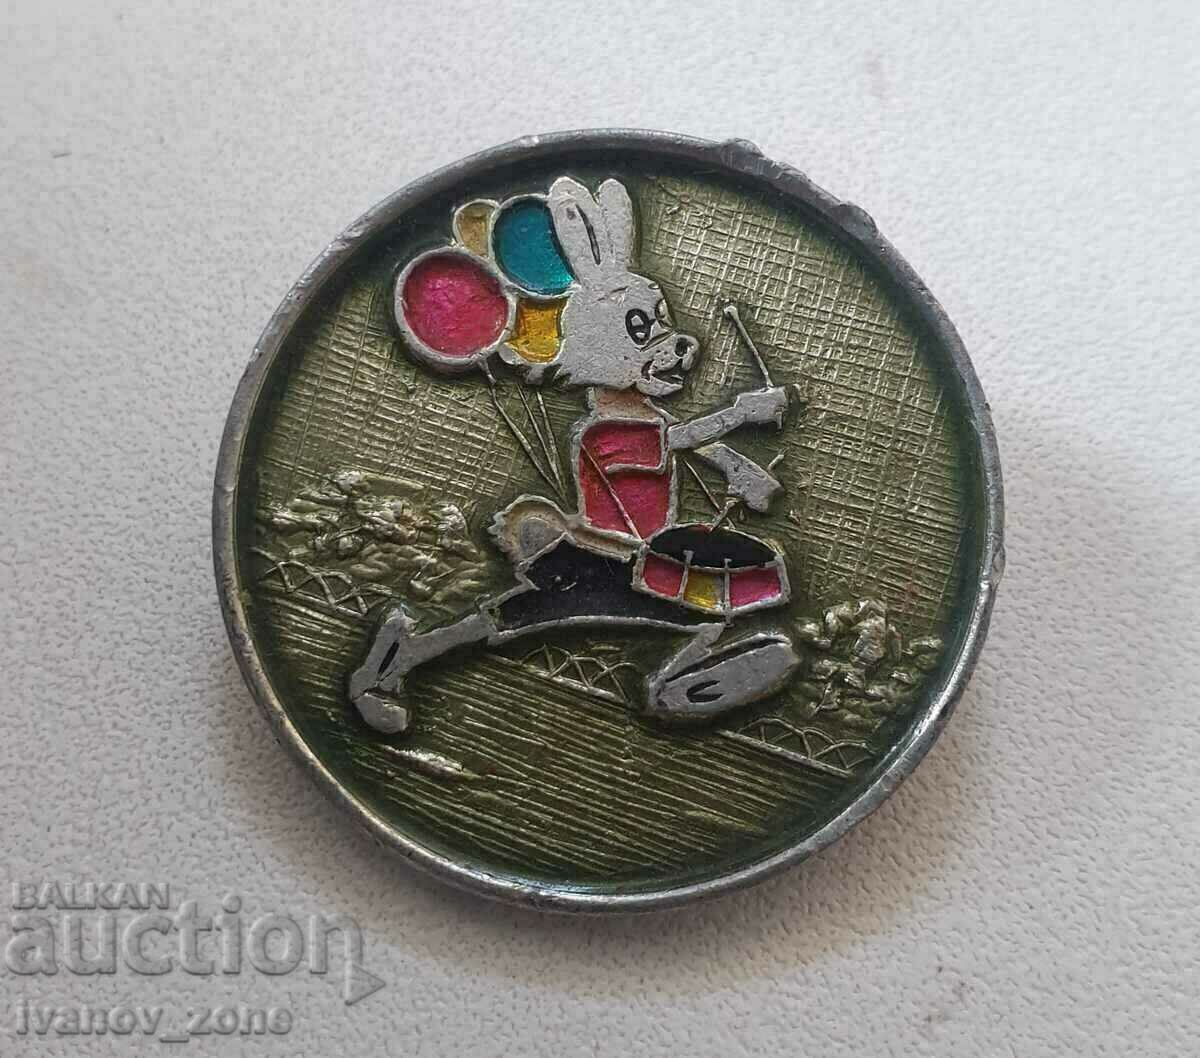 Bunny NU, WEATHER Badge Russia